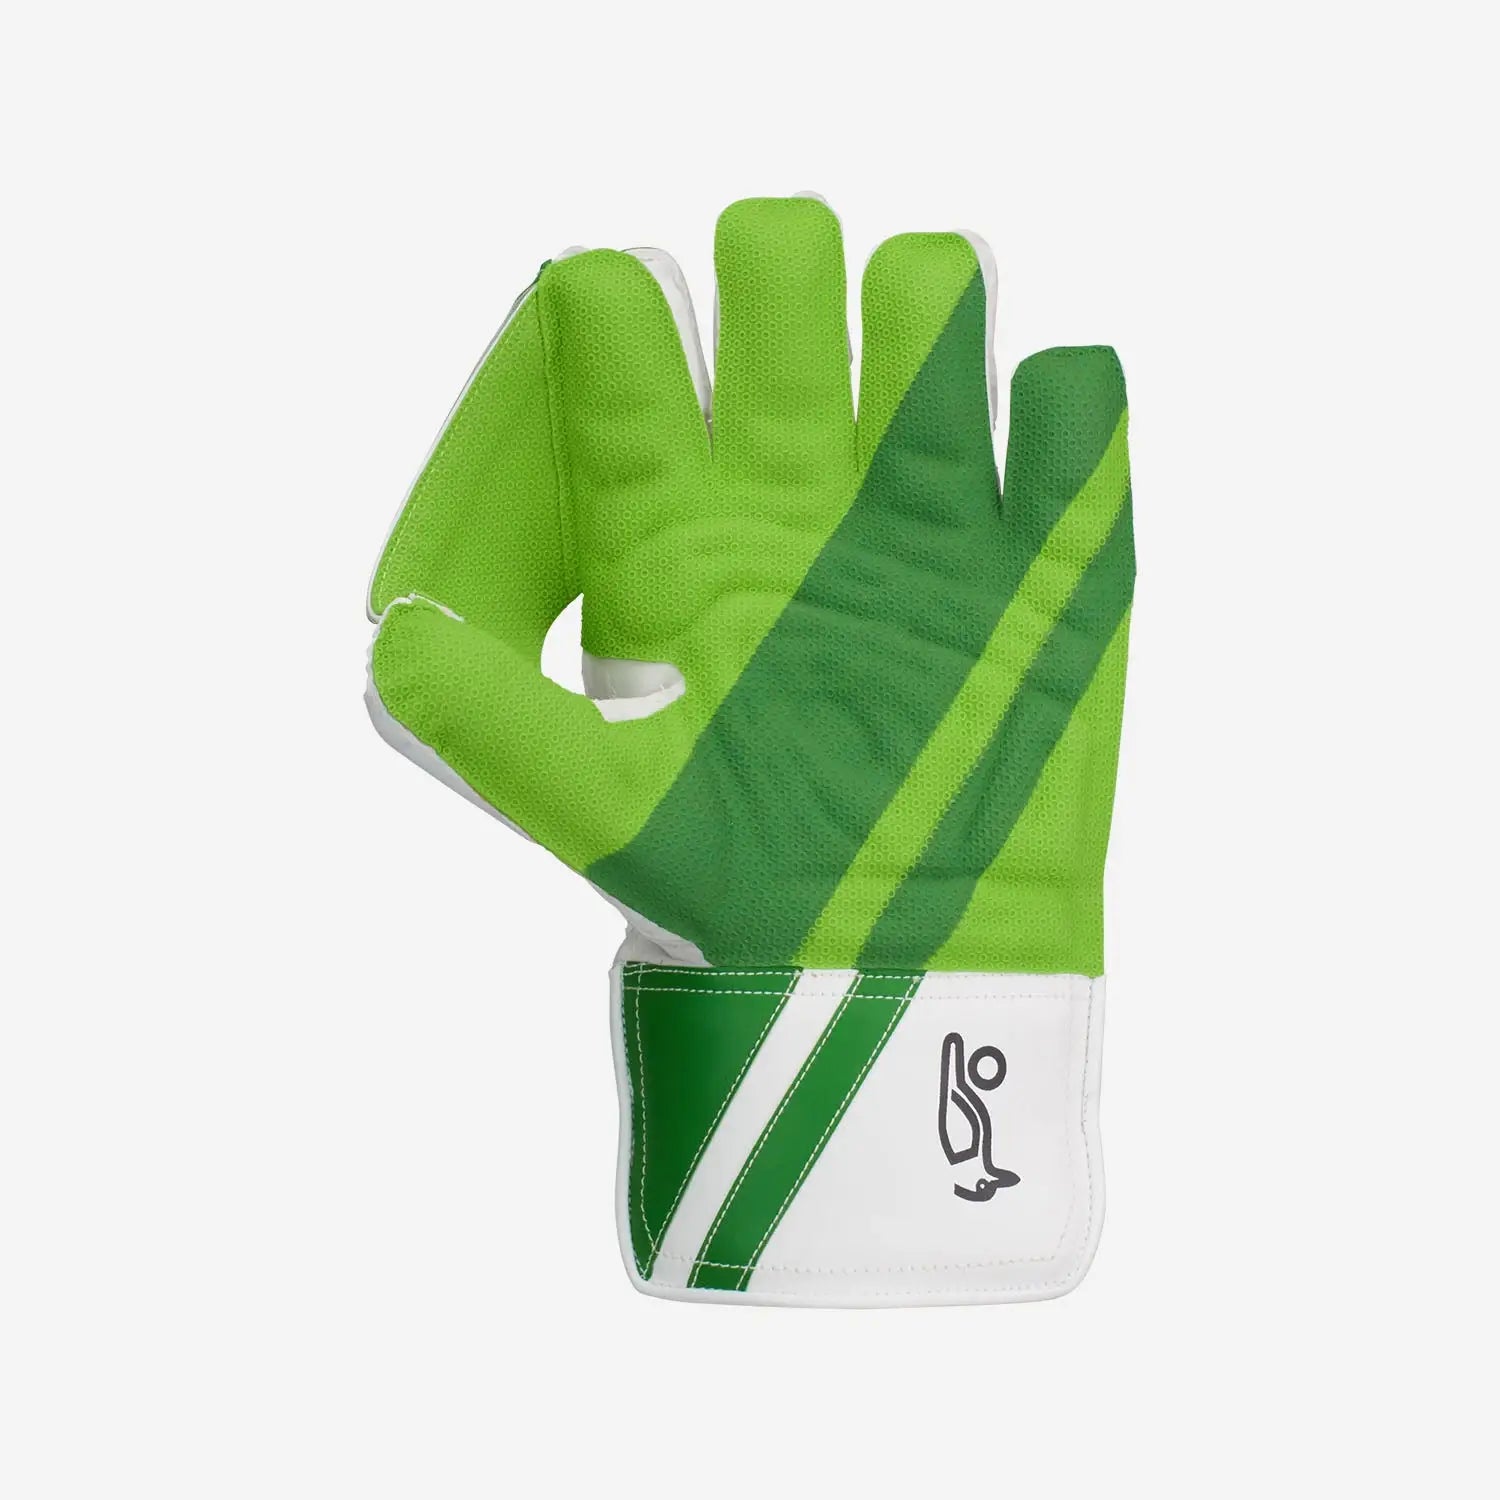 Kookaburra LC 3.0 Wicket Keeping Glove Enhanced ‘Catching Cup’ - GLOVE - WICKET KEEPING